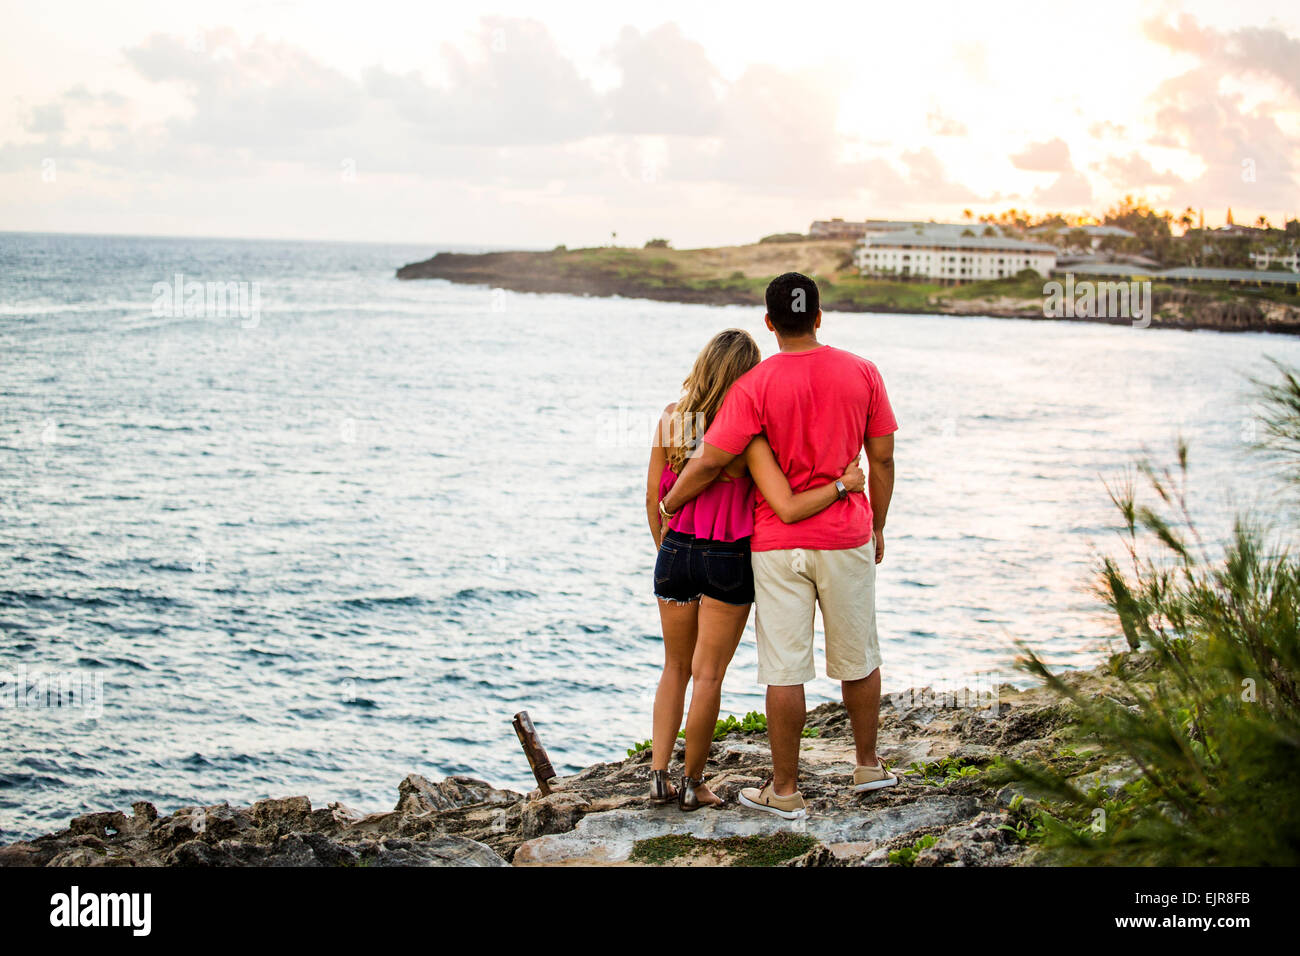 Couple enjoying scenic view of beach Stock Photo